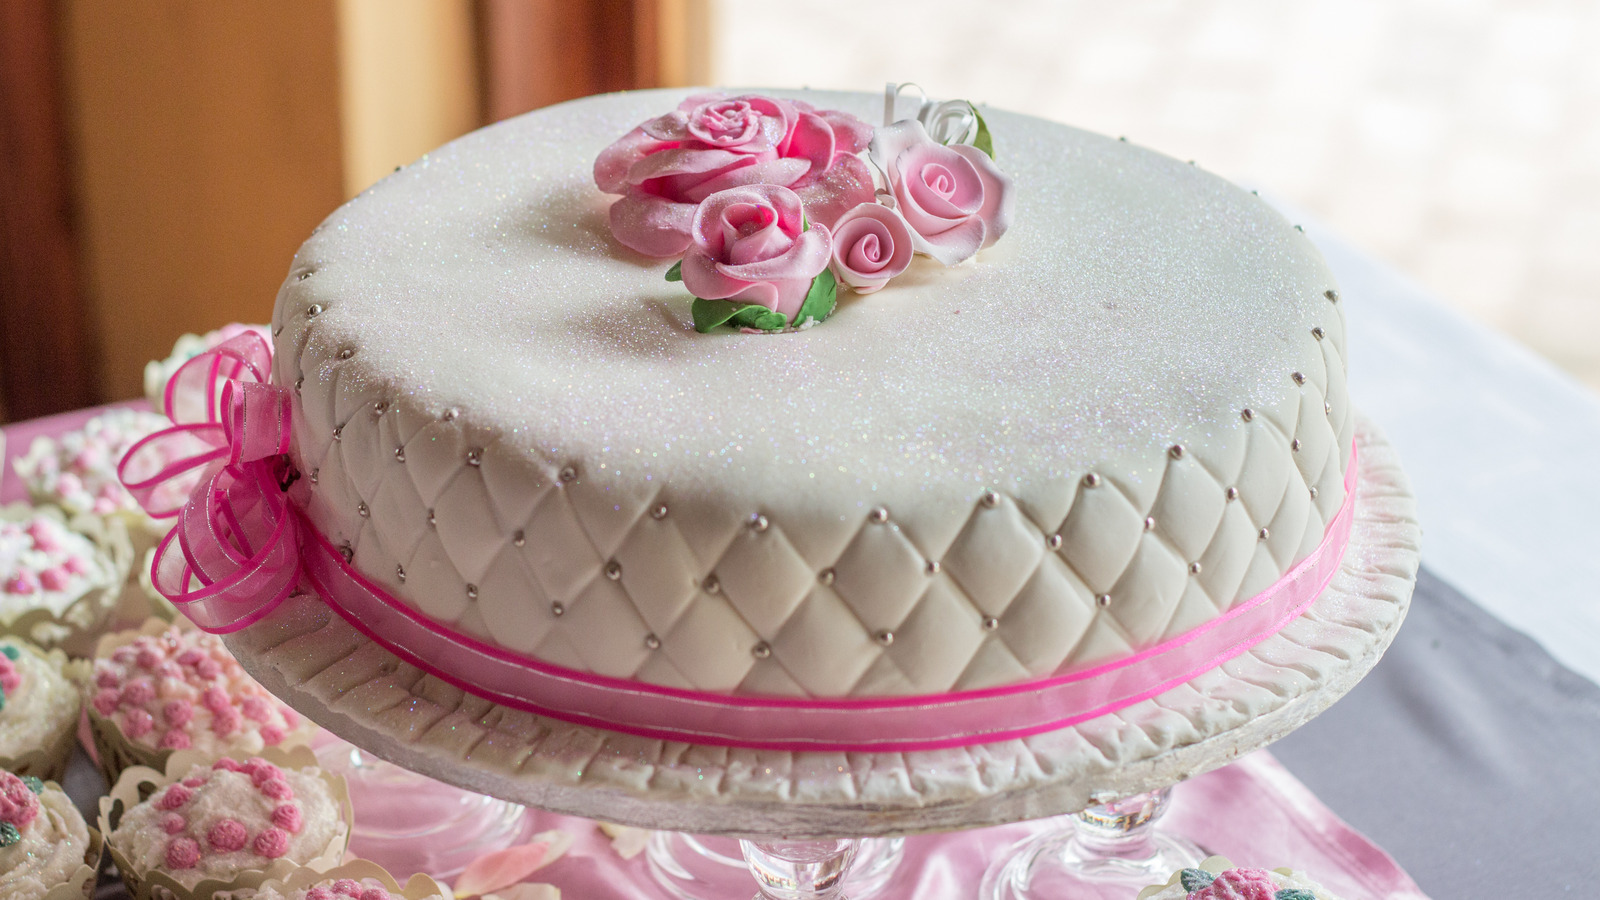 Best Fondant Wedding Cake In Chennai | Order Online